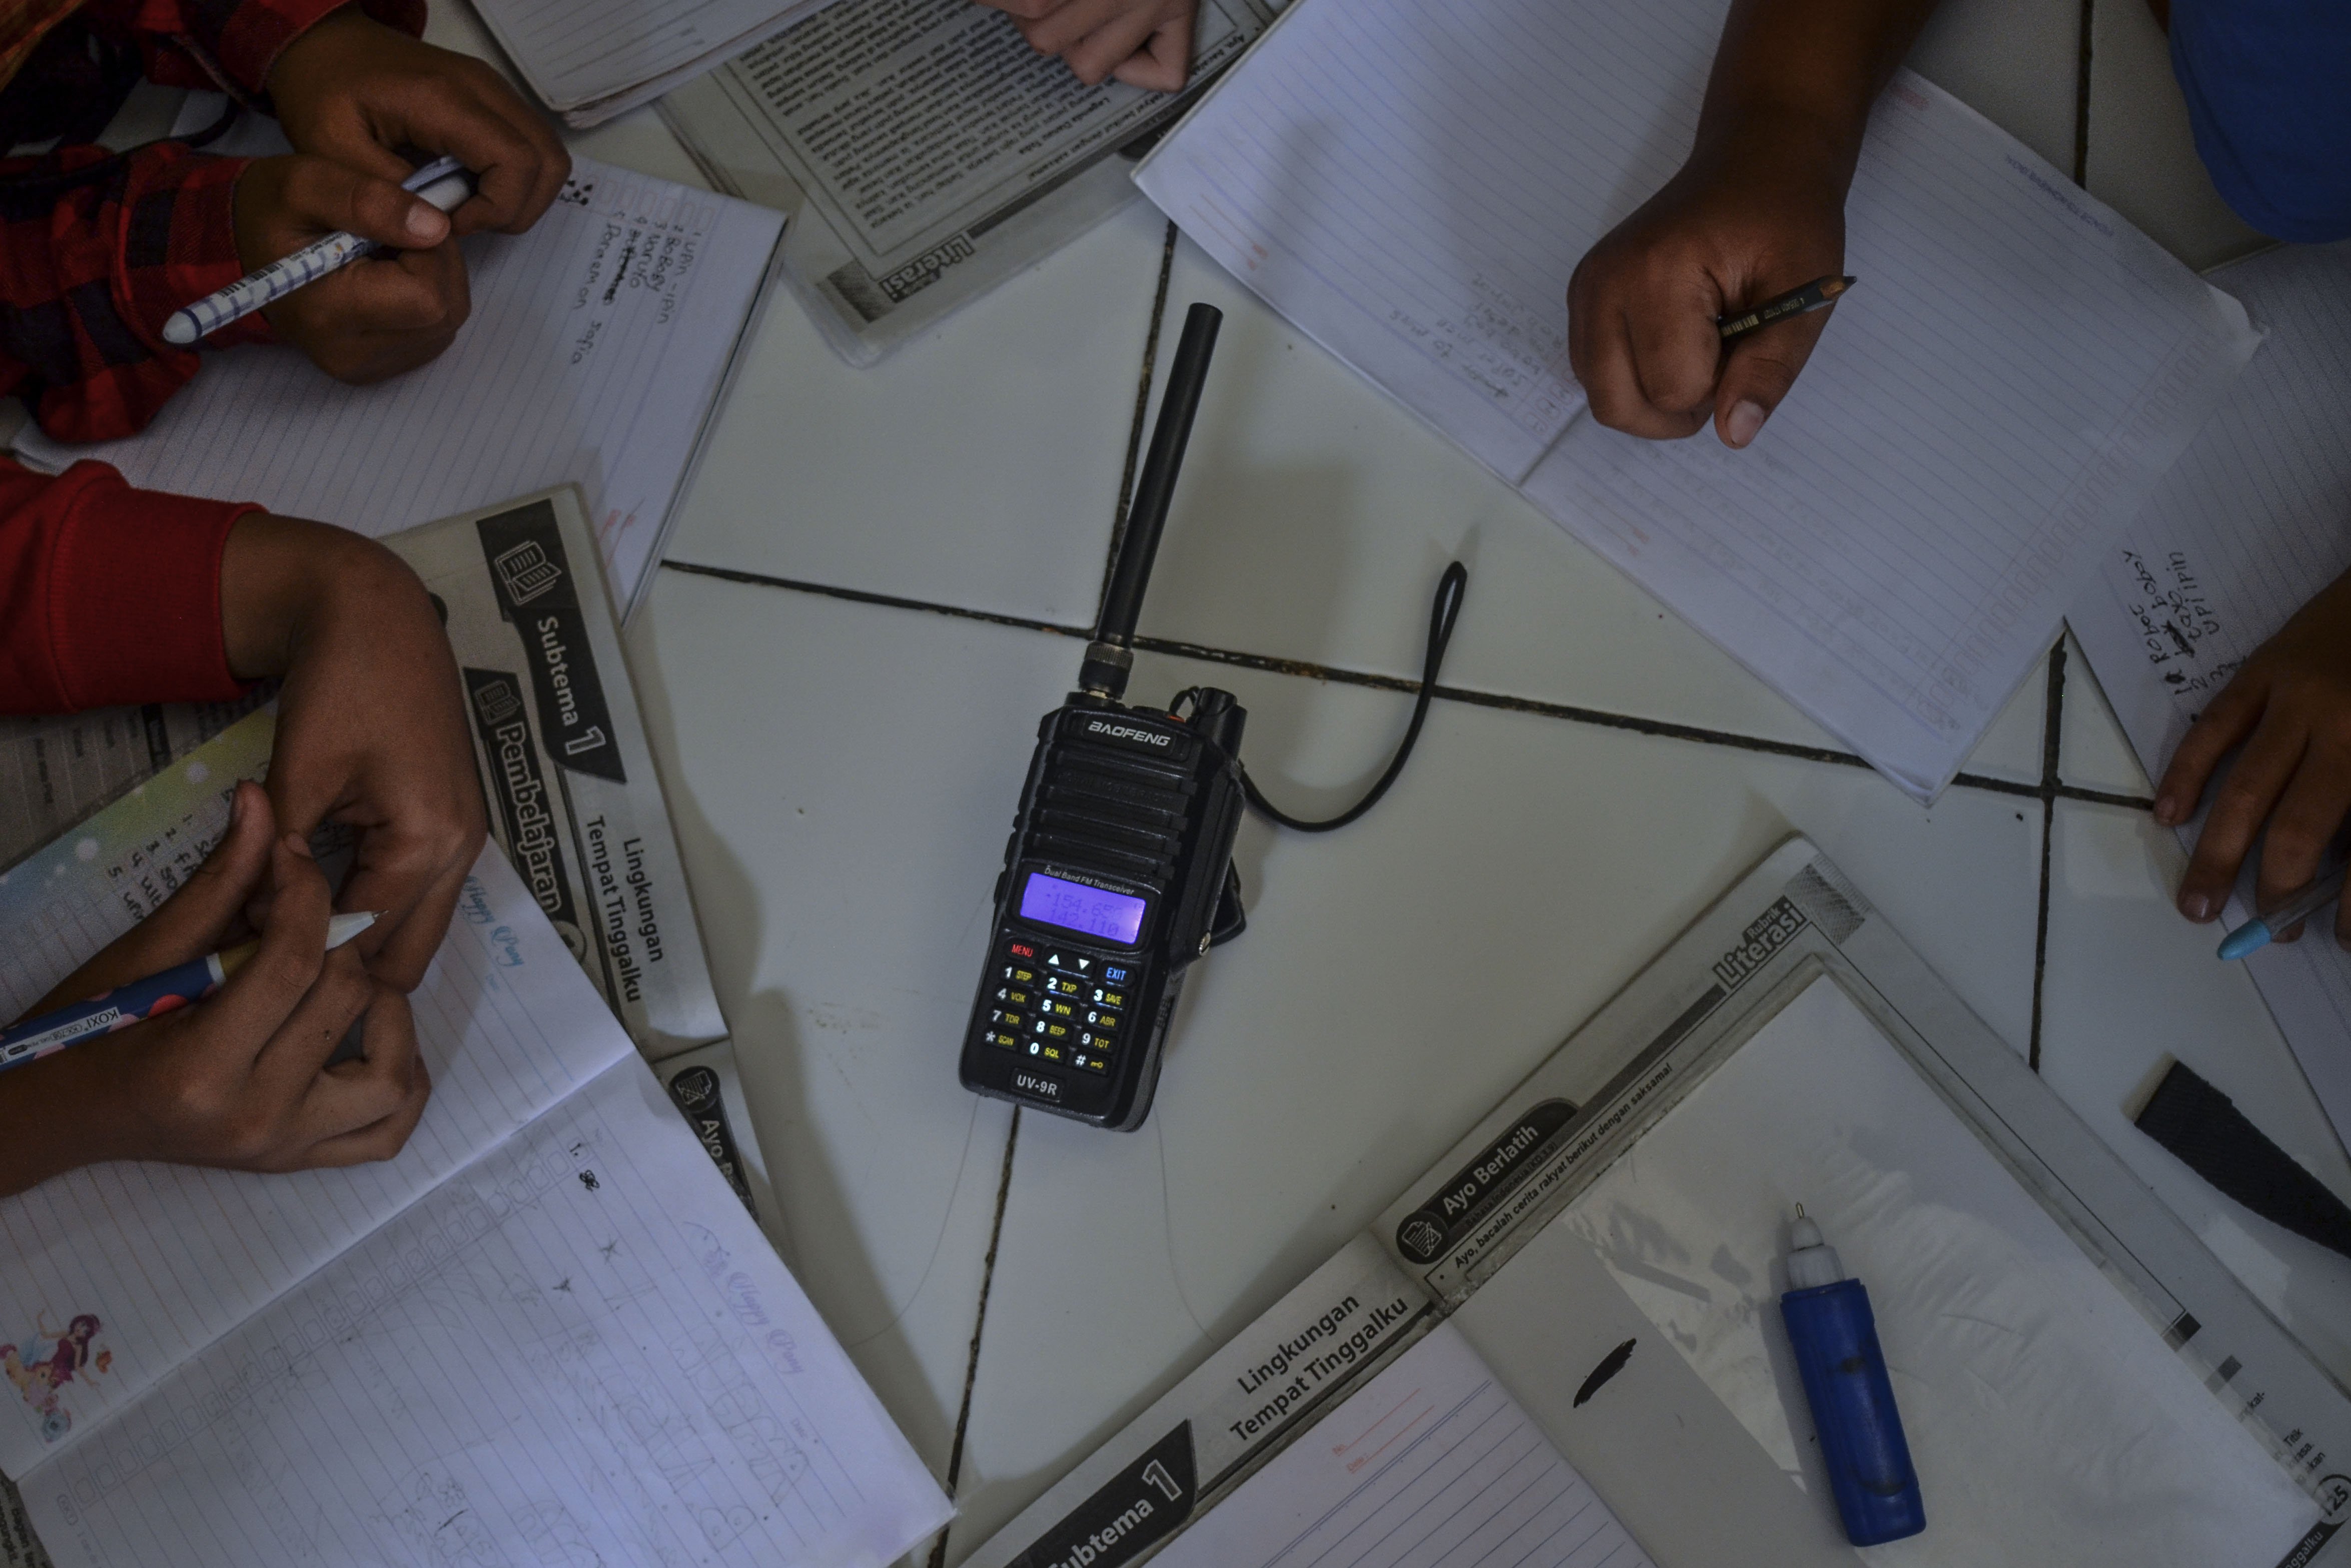 Siswa sekolah Madrasah Ibtidaiyah Pesawahan mendengarkan arahan wali kelas dari radio Handy Talky (HT) saat pembelajaran jarak jauh secara kelompok di Rumah Dusun Ciakar, Desa Pasawahan, Kecamatan Banjaranyar Kabupaten Ciamis, Jawa Barat.